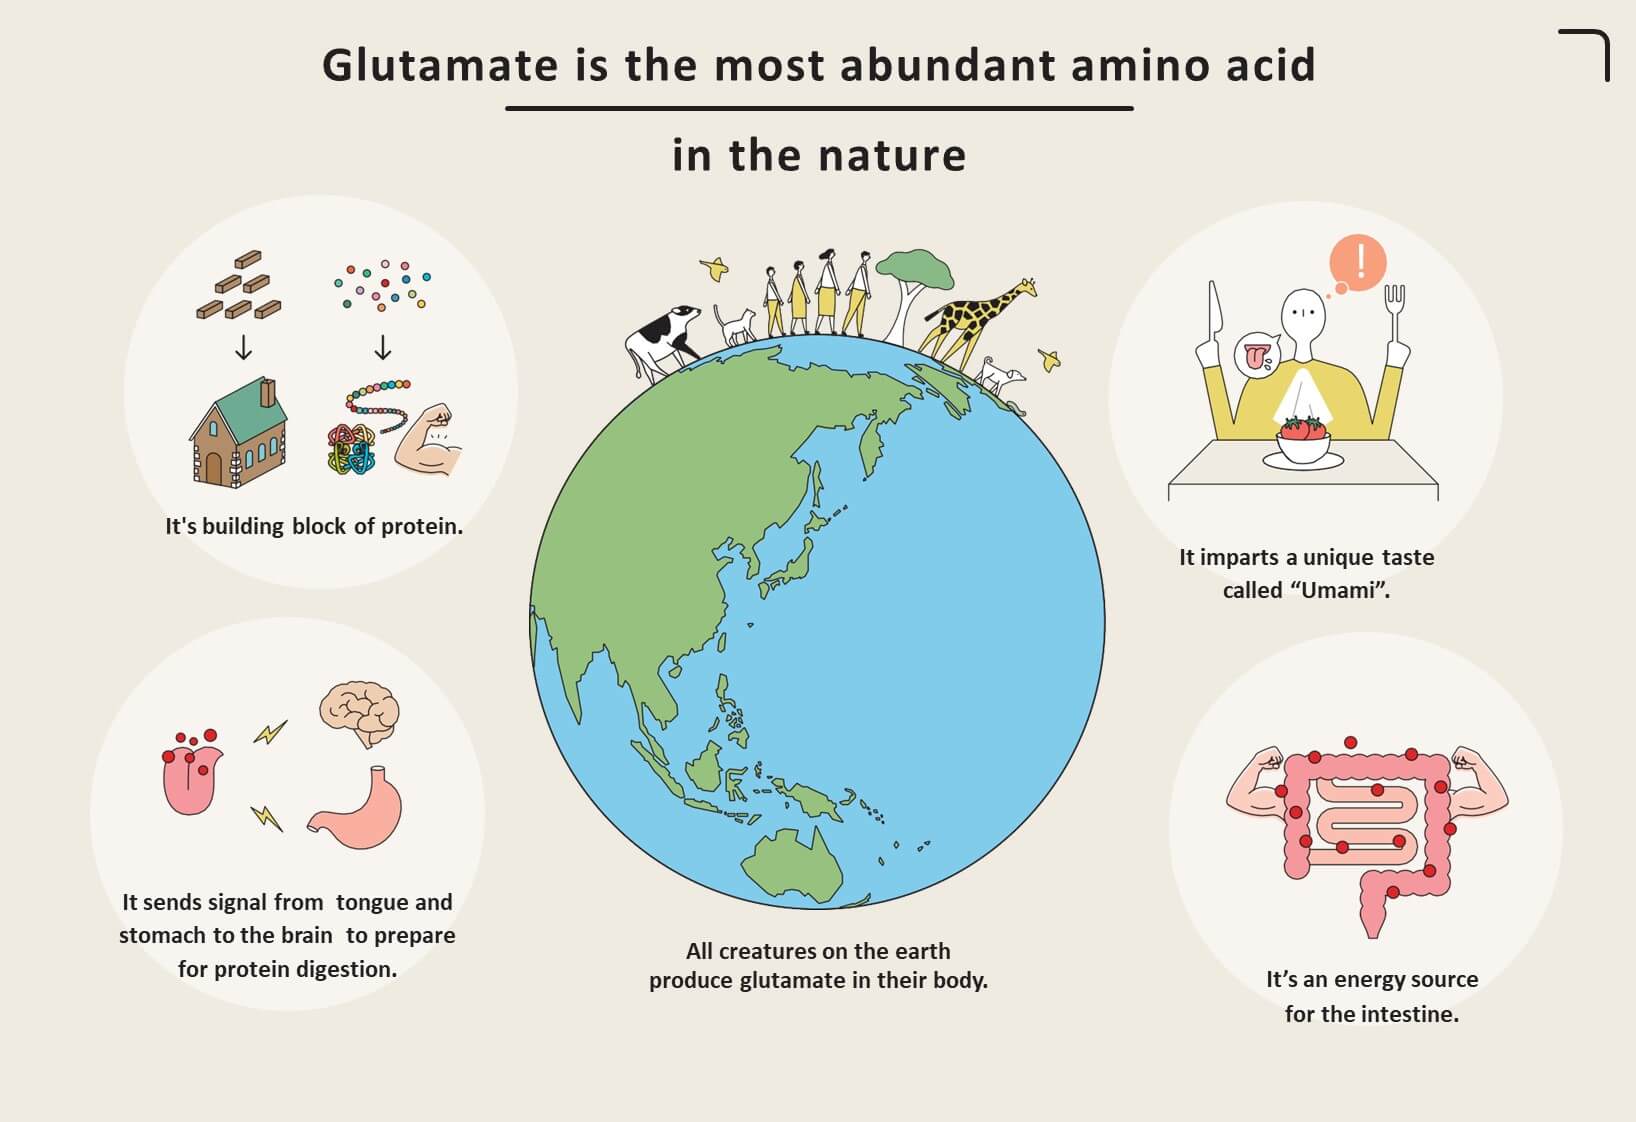 Glutamate is most abundant amino acids in the nature